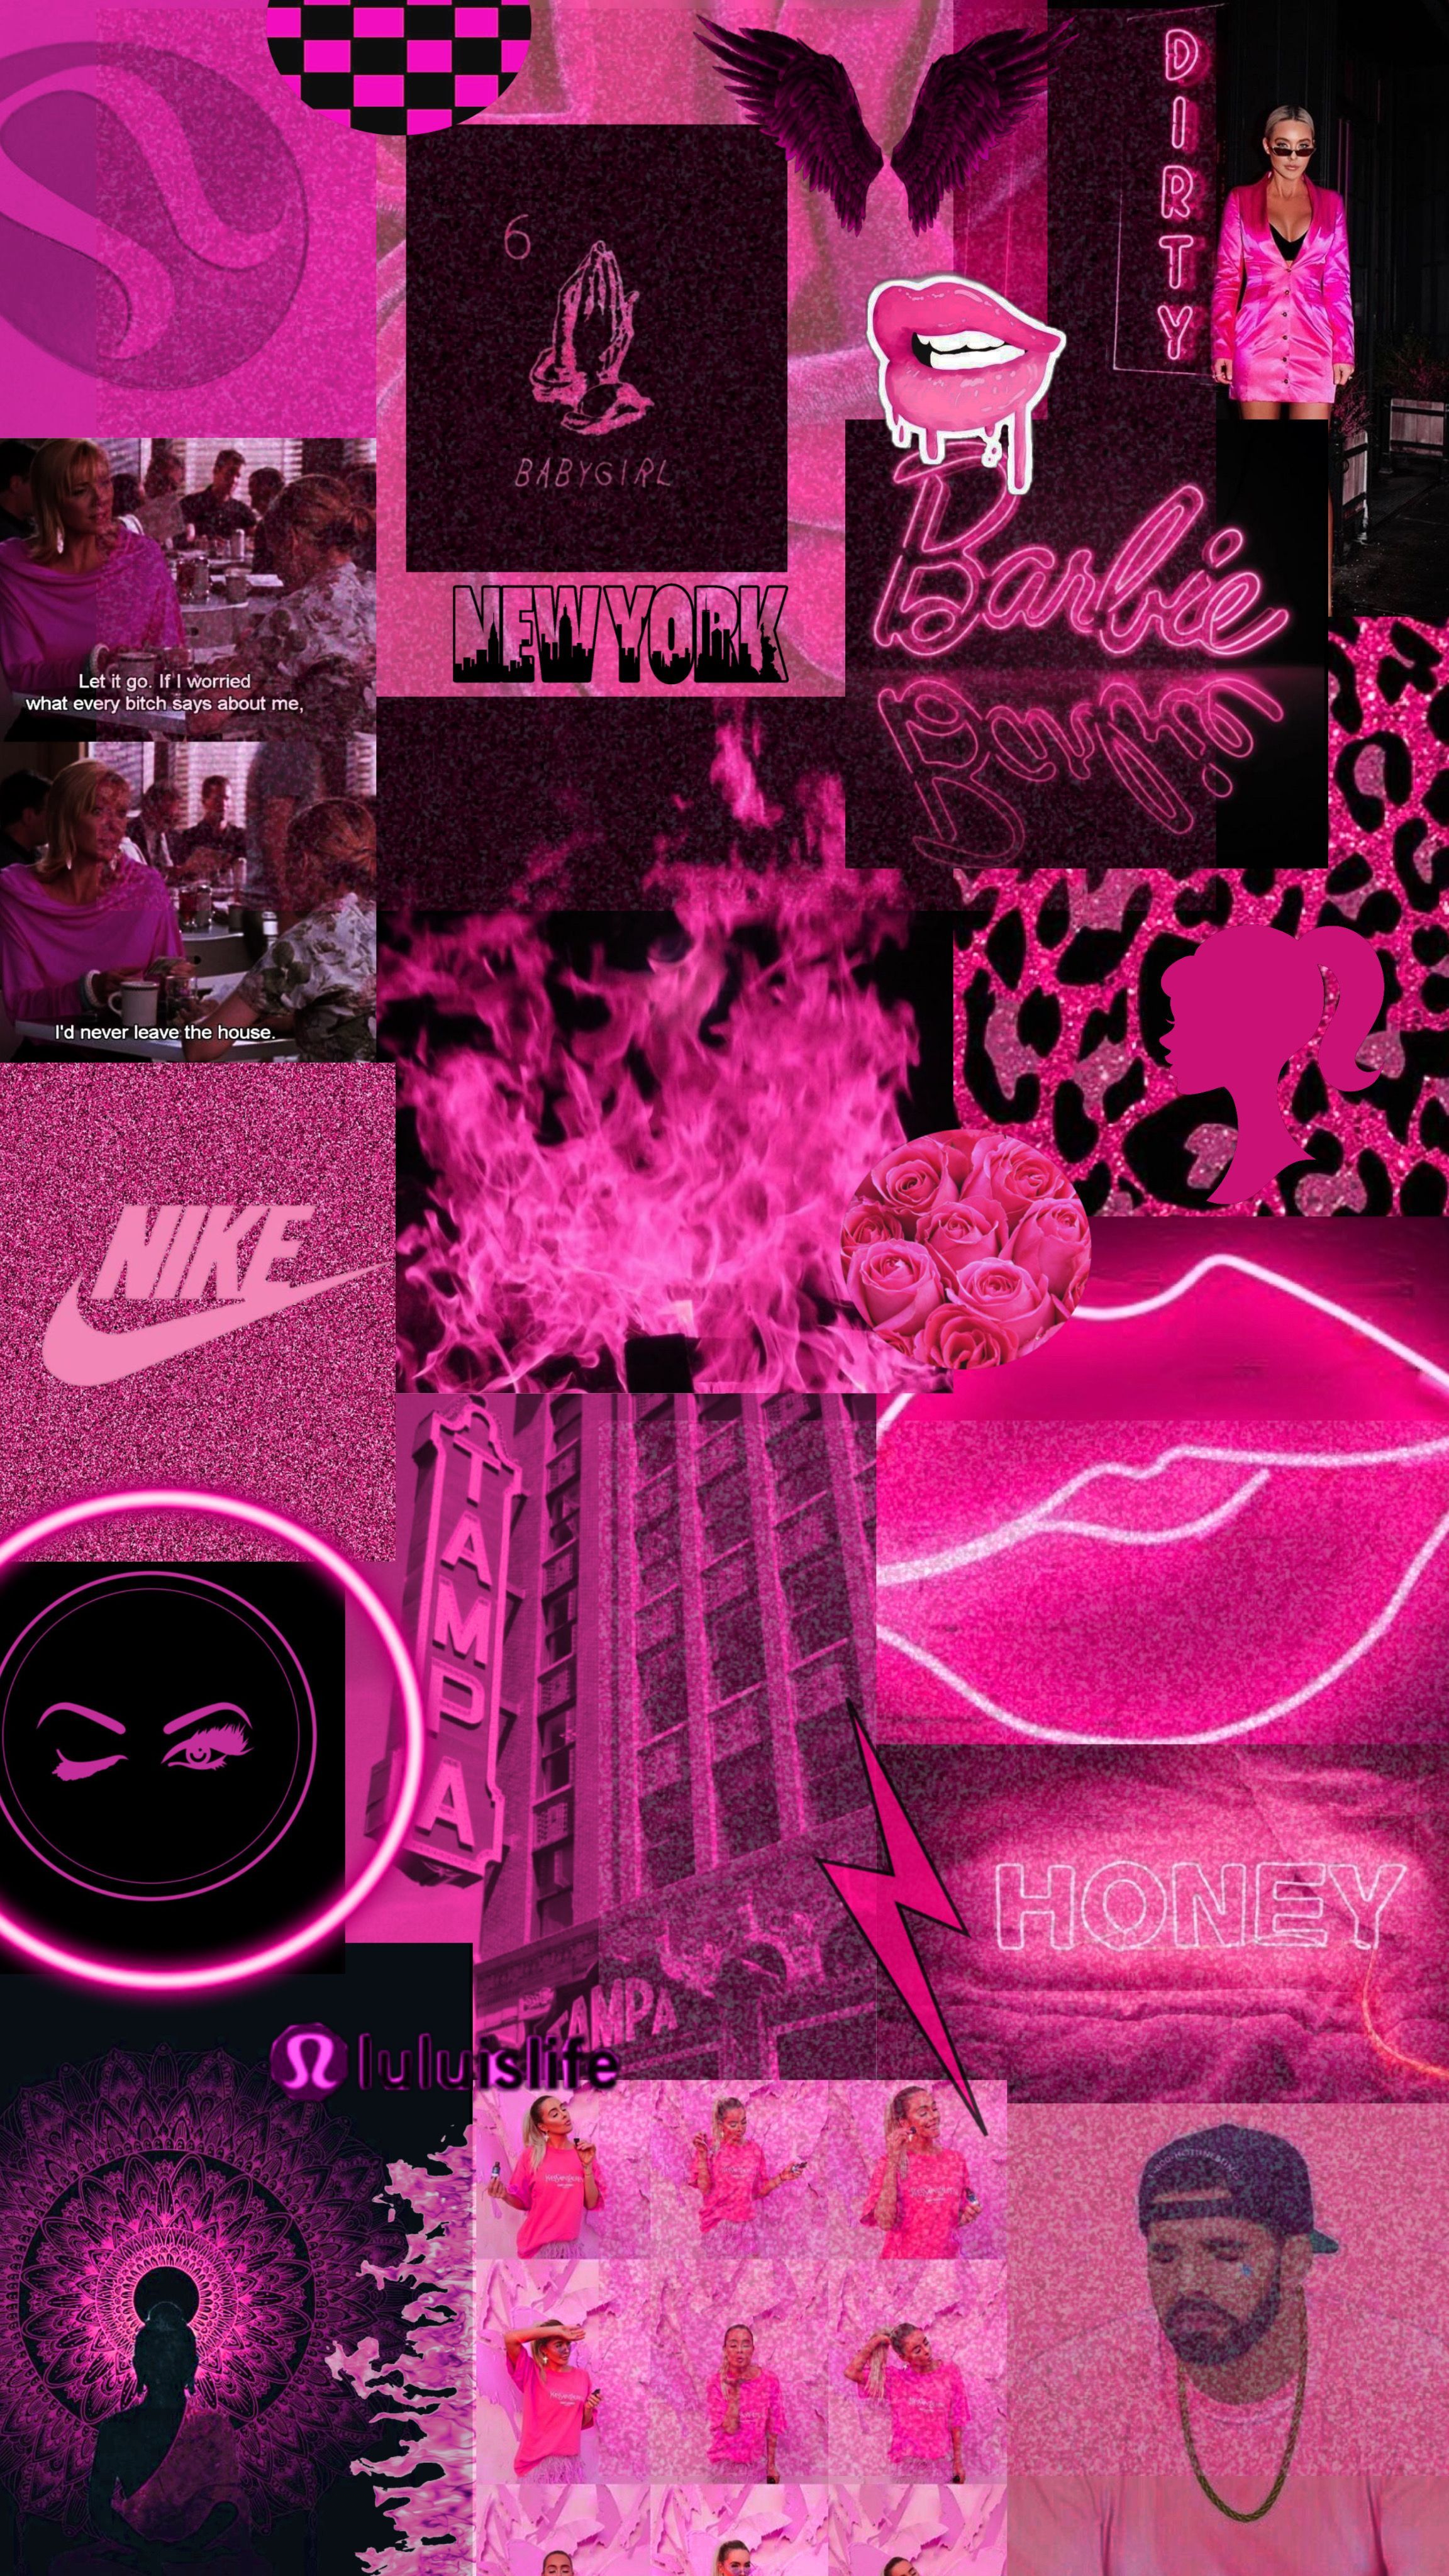 Hot Pink Aesthetic. iPhone wallpaper tumblr aesthetic, iPhone wallpaper girly, Aesthetic iphone wallpaper